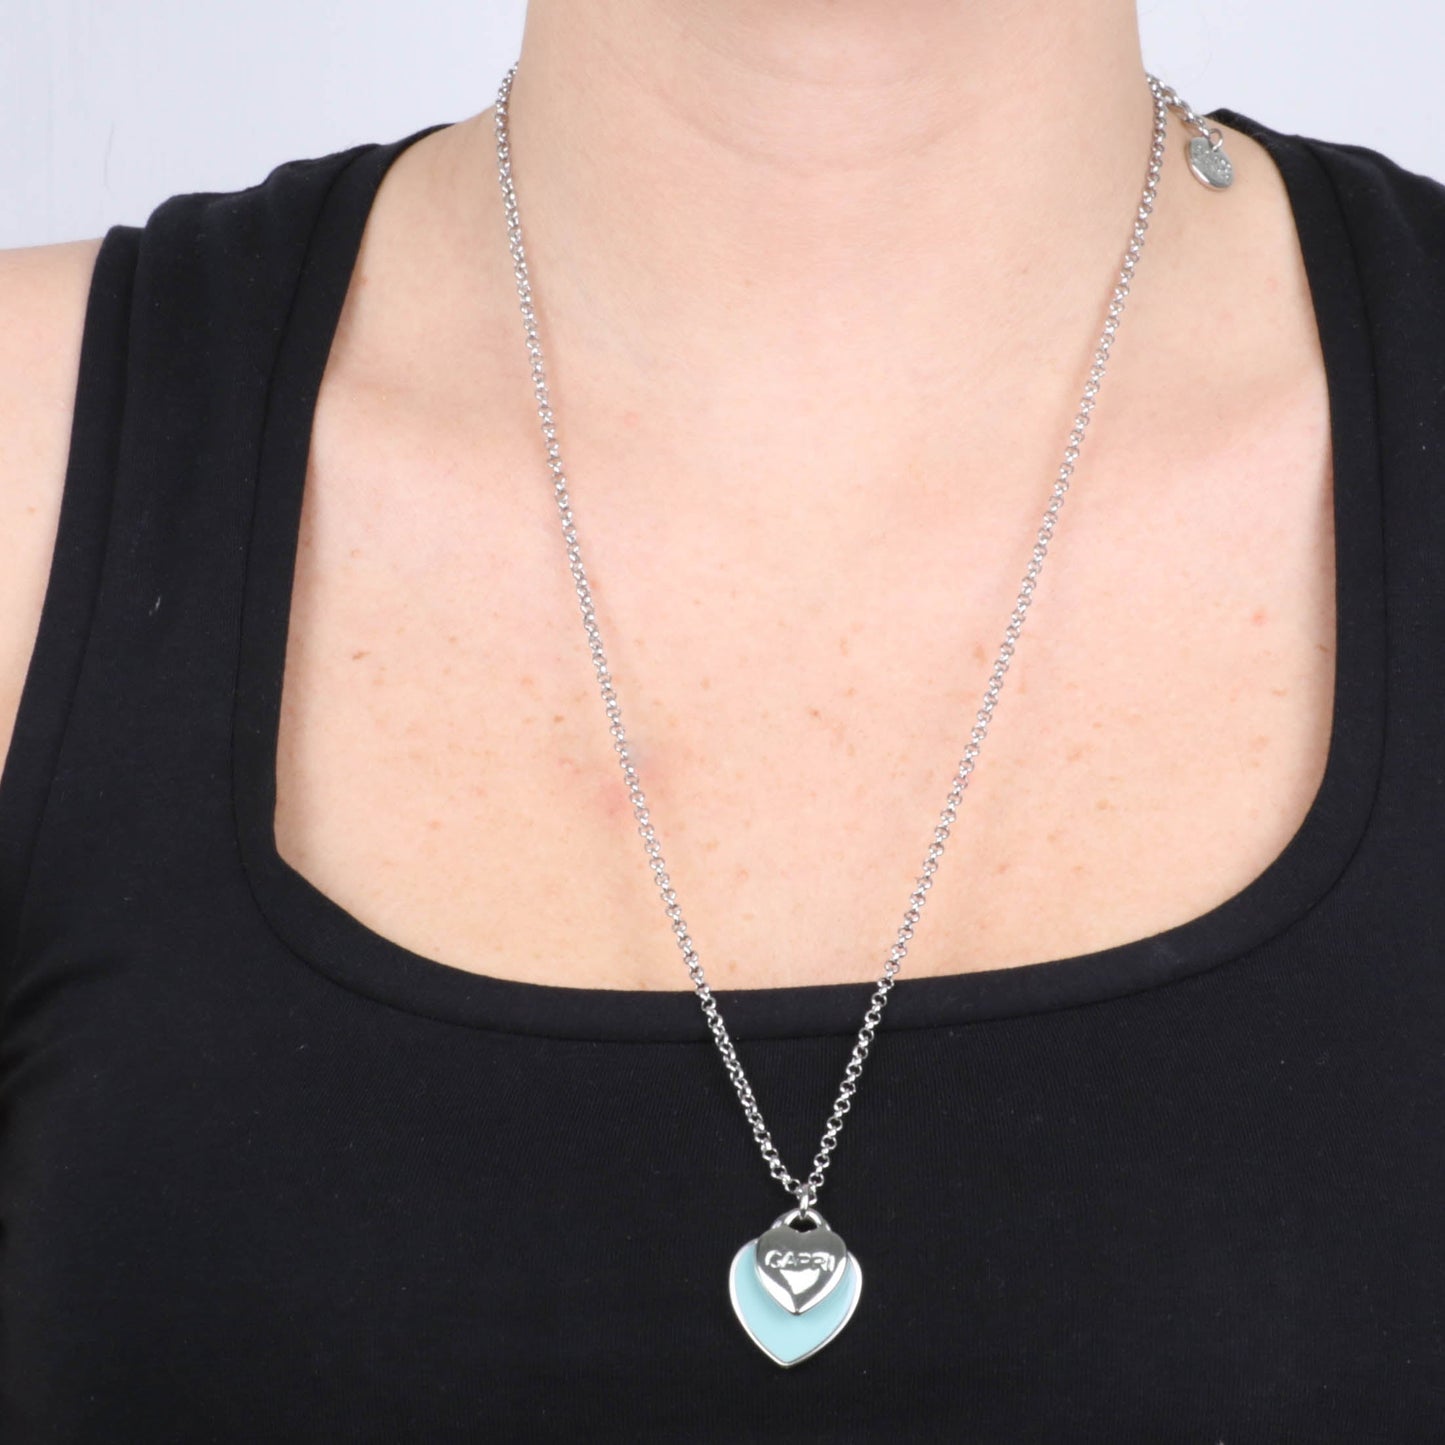 Metal necklace with heart pending in green enamel